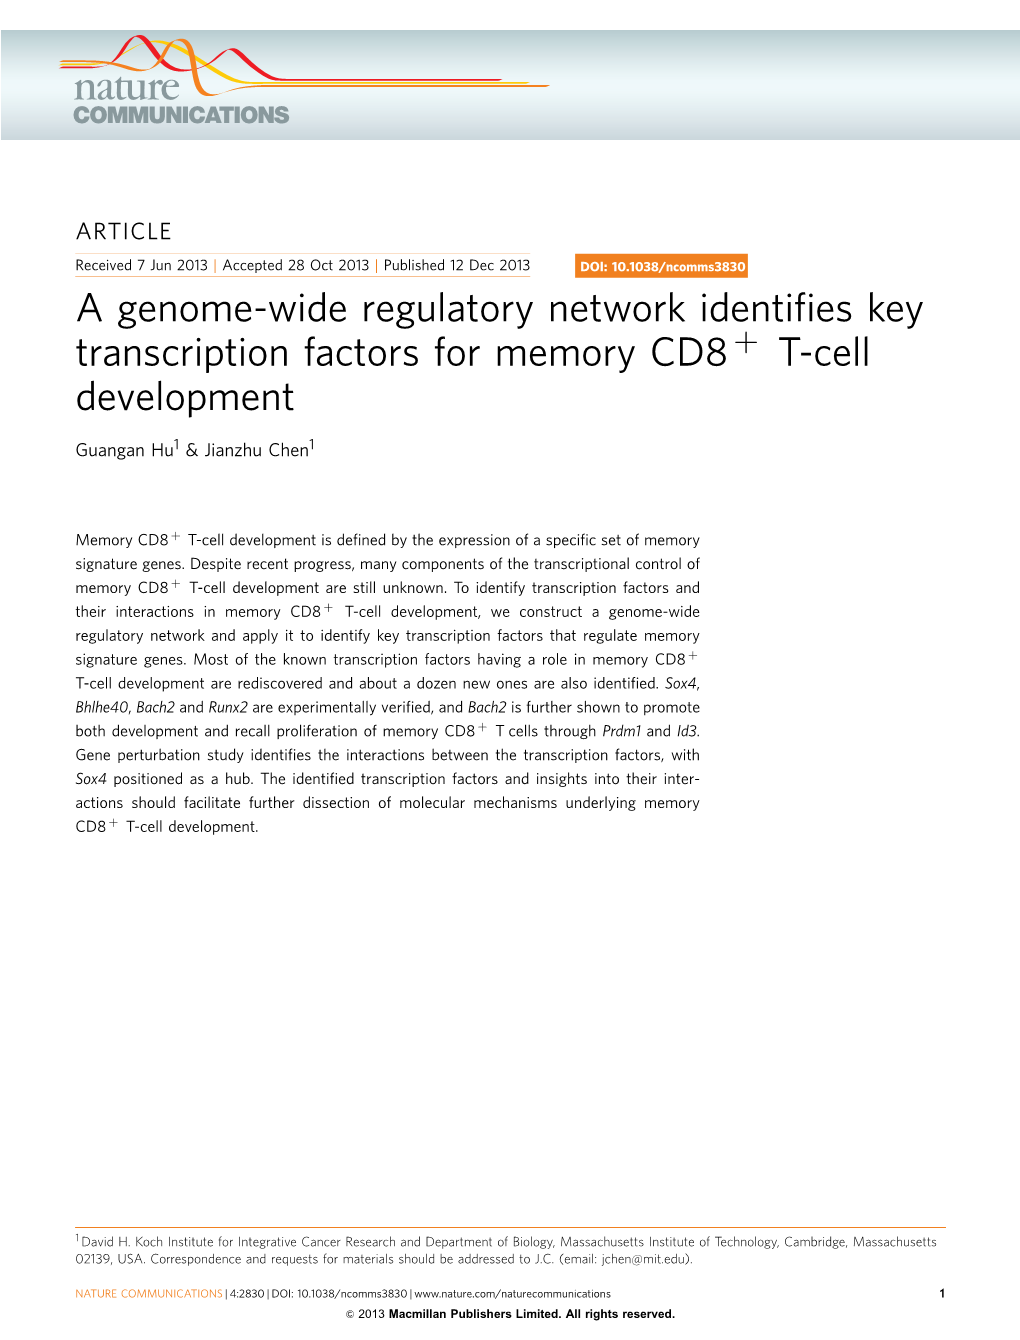 A Genome-Wide Regulatory Network Identifies Key Transcription Factors for Memory CD8&Plus; T-Cell Development